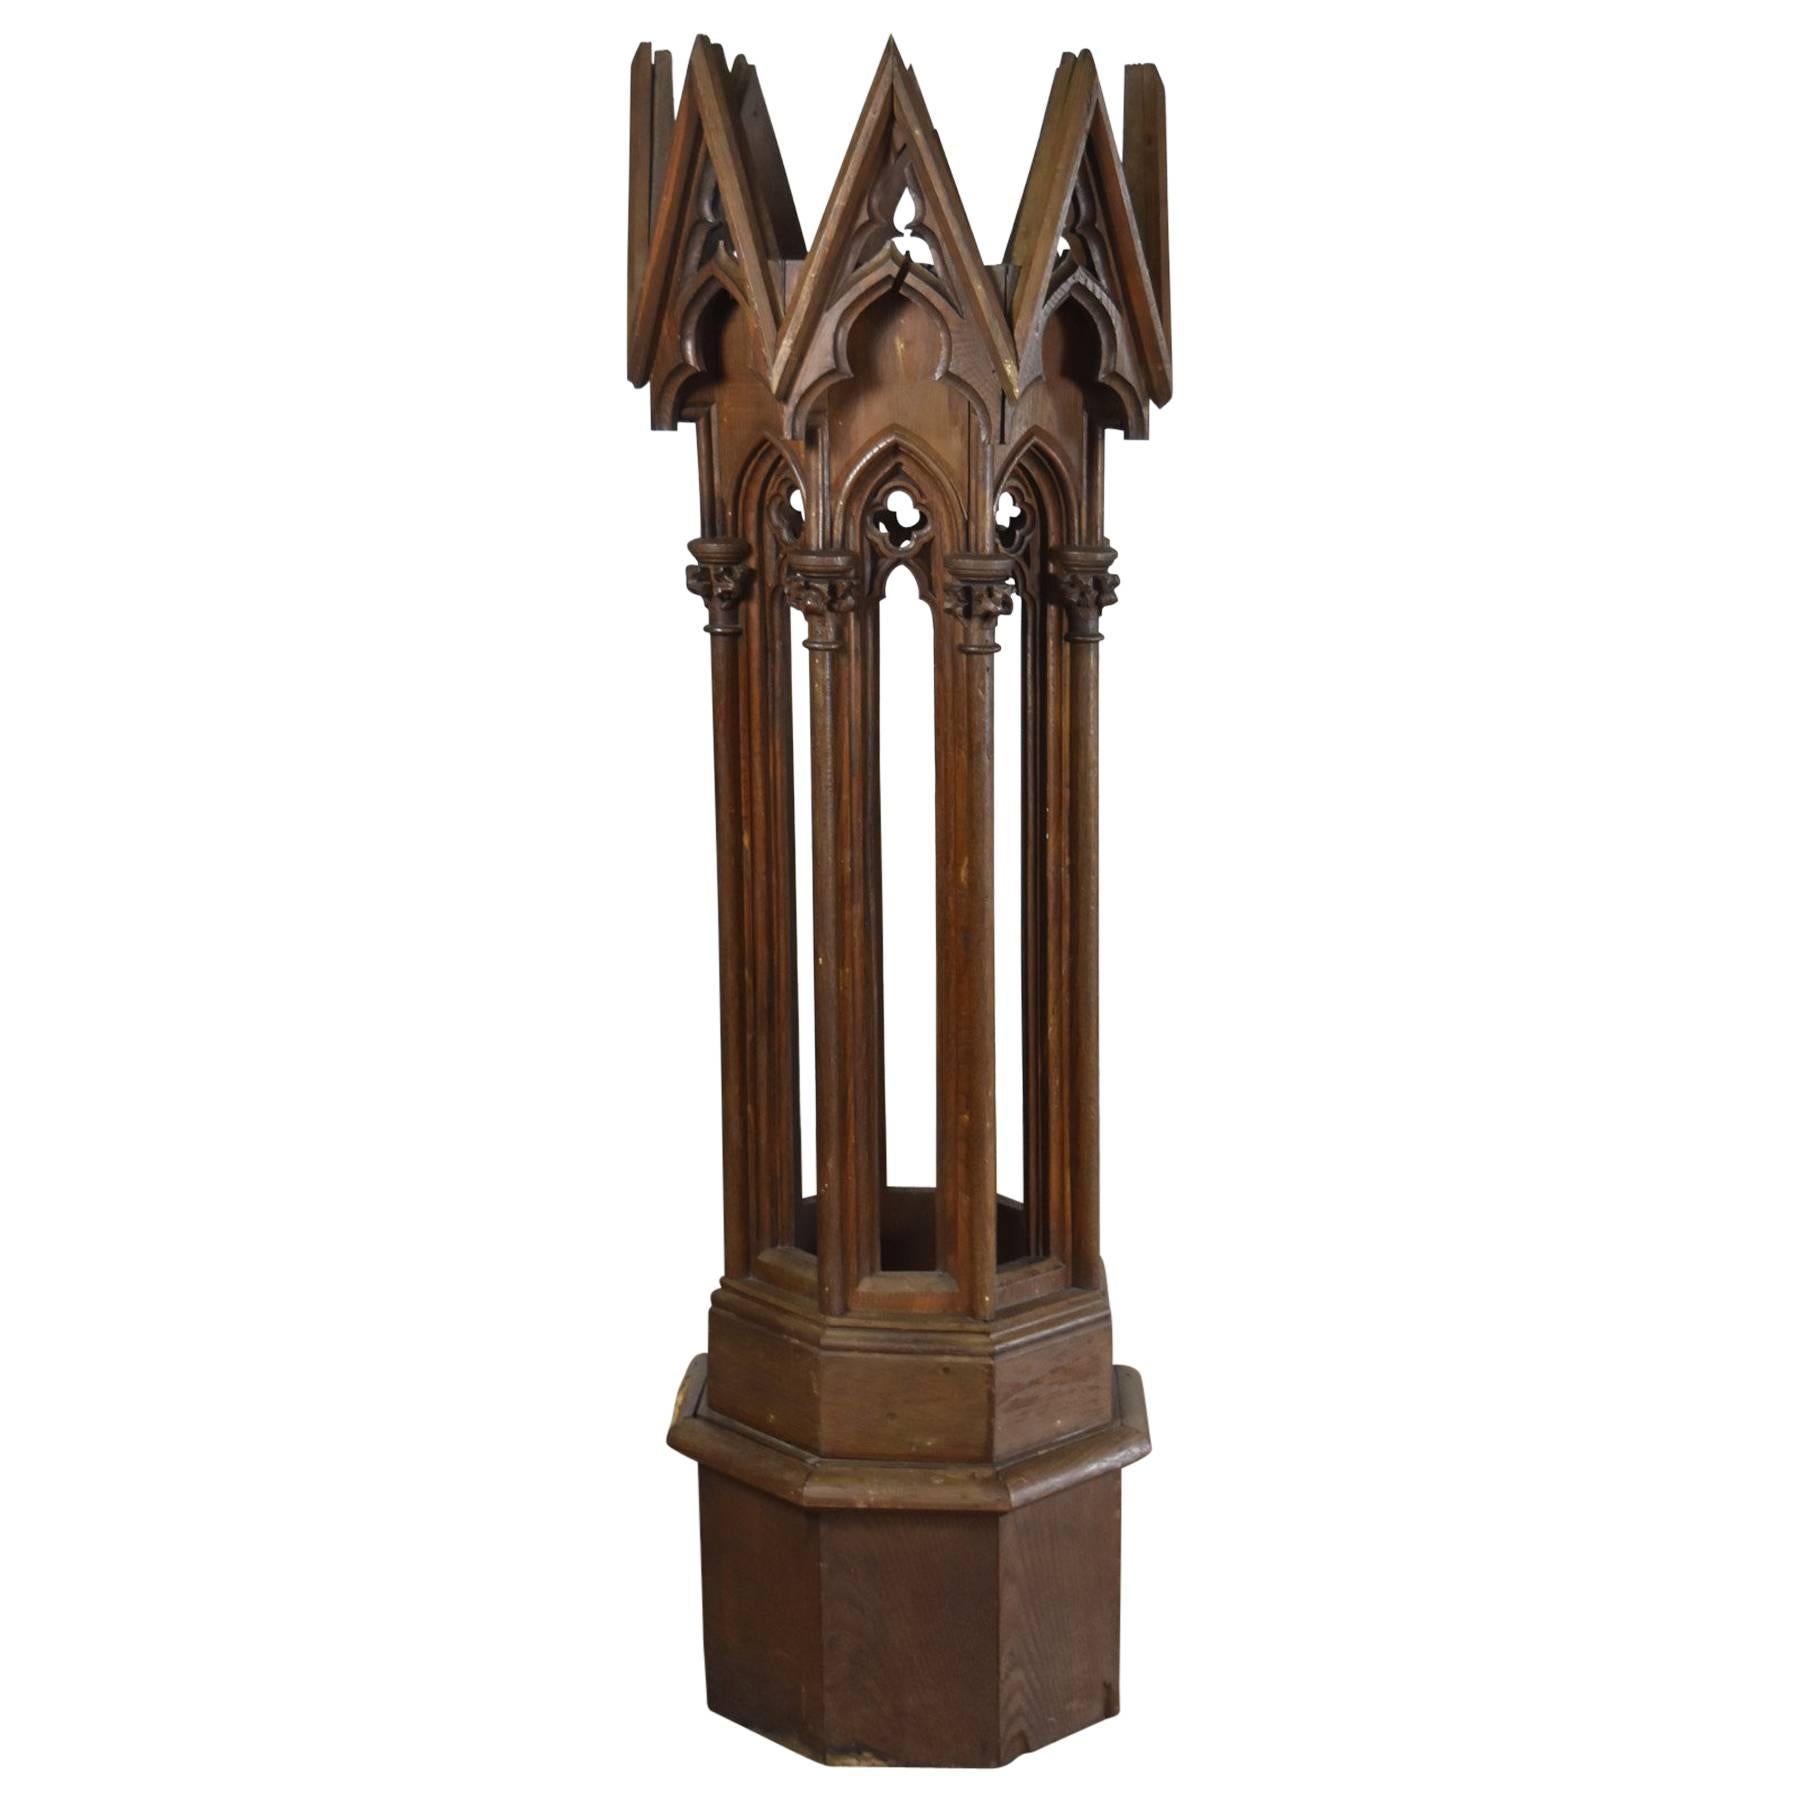 Neo-Gothic 19th Century Octagonal Pedestal / Stand / Architectural Model